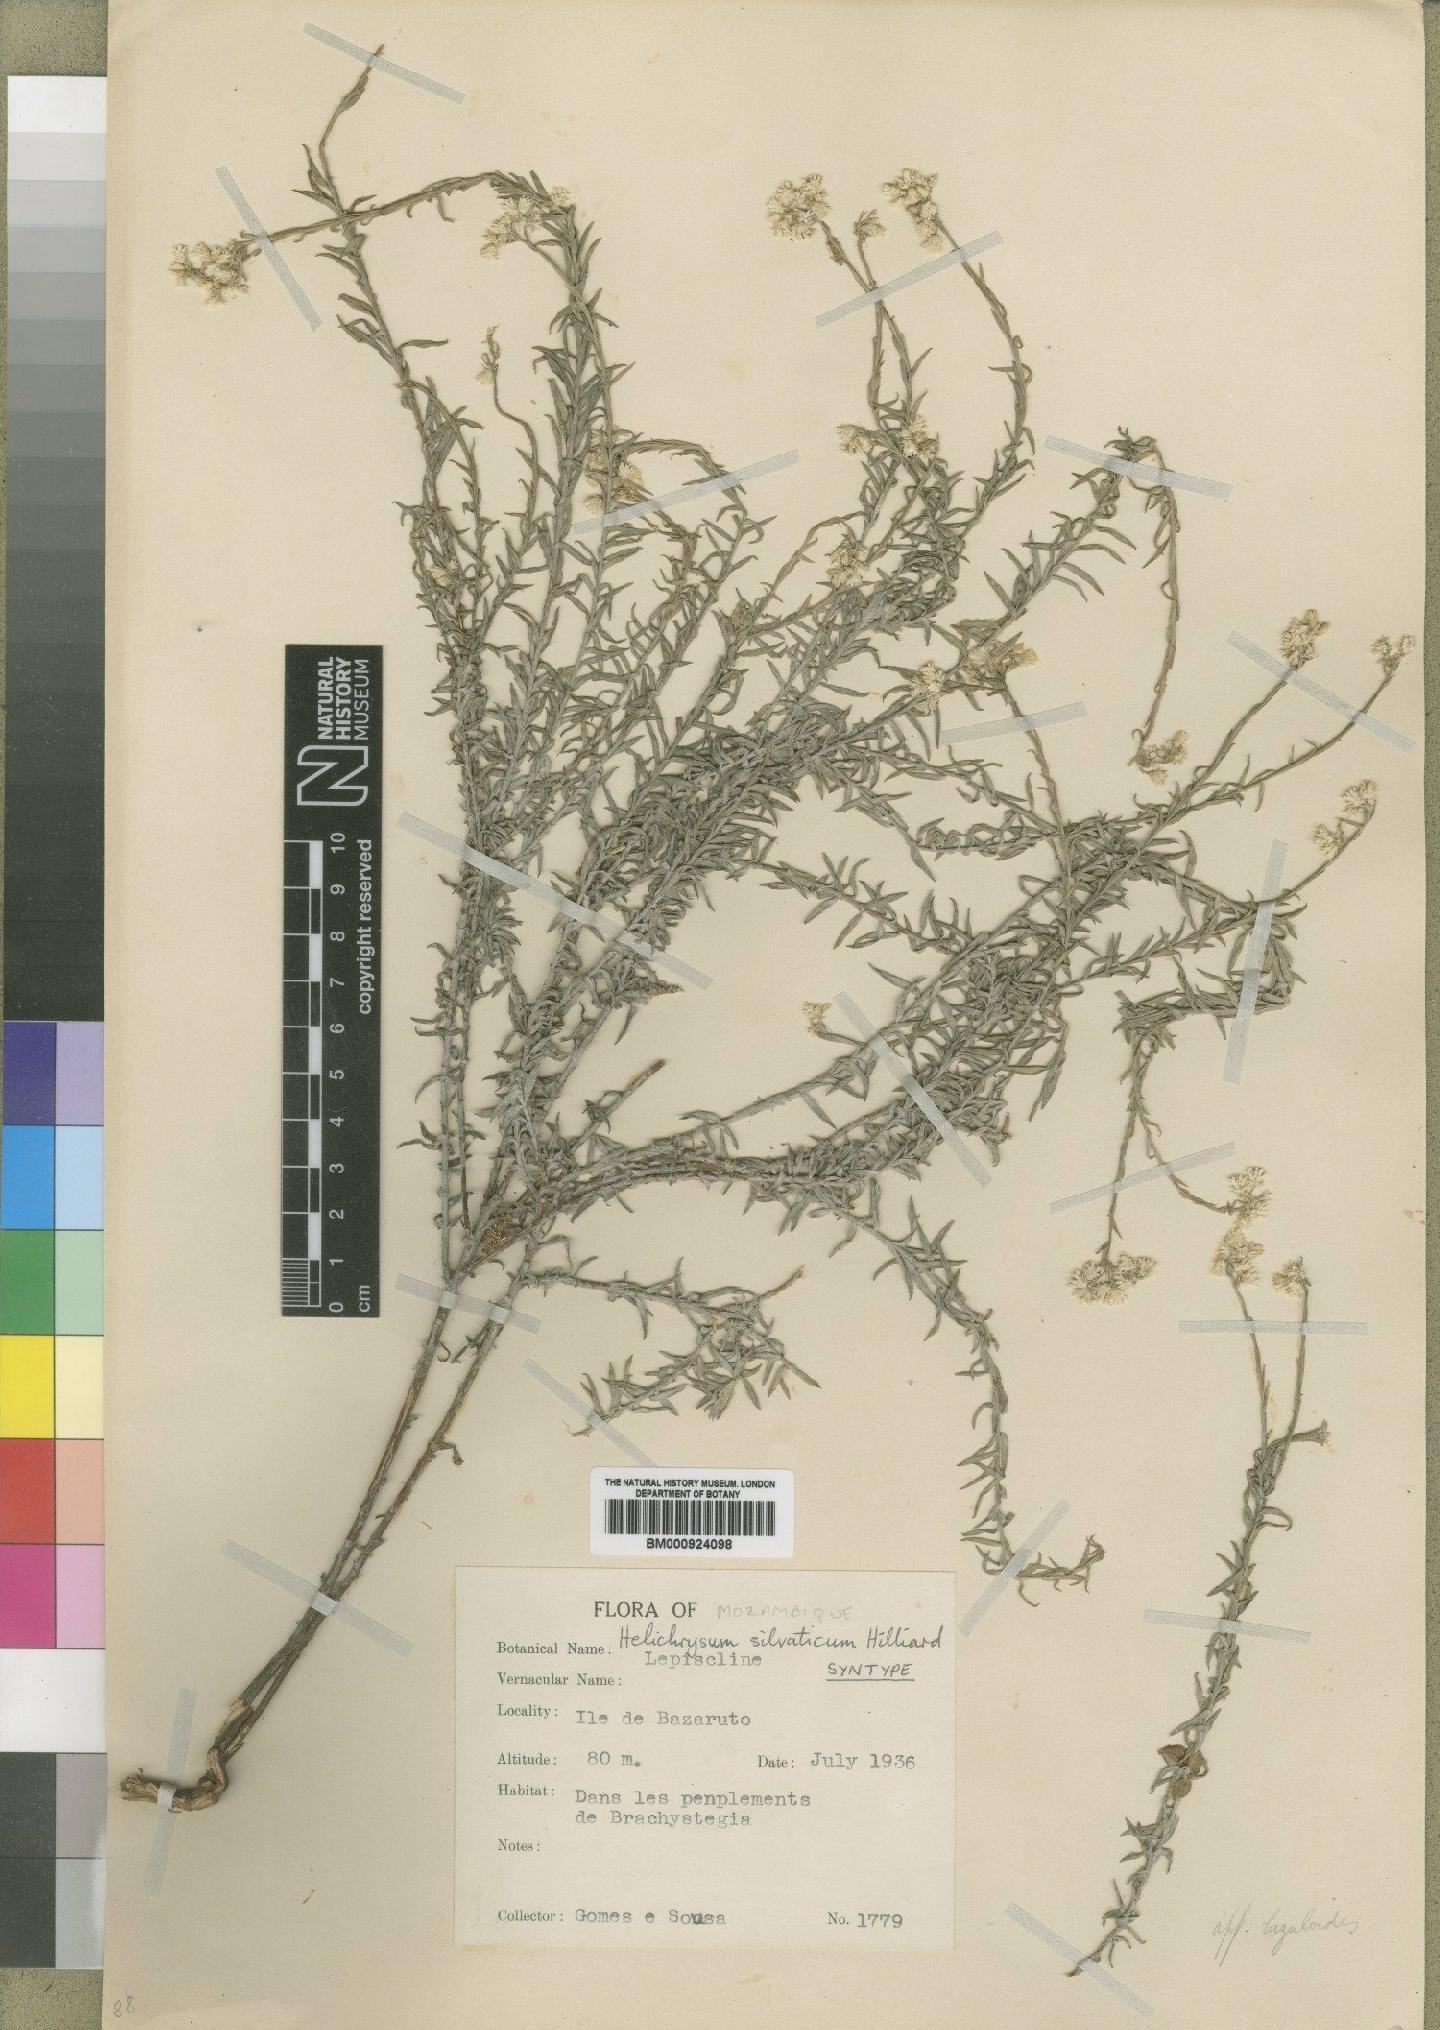 To NHMUK collection (Helichrysum silvaticum Hilliard; Type; NHMUK:ecatalogue:4529126)